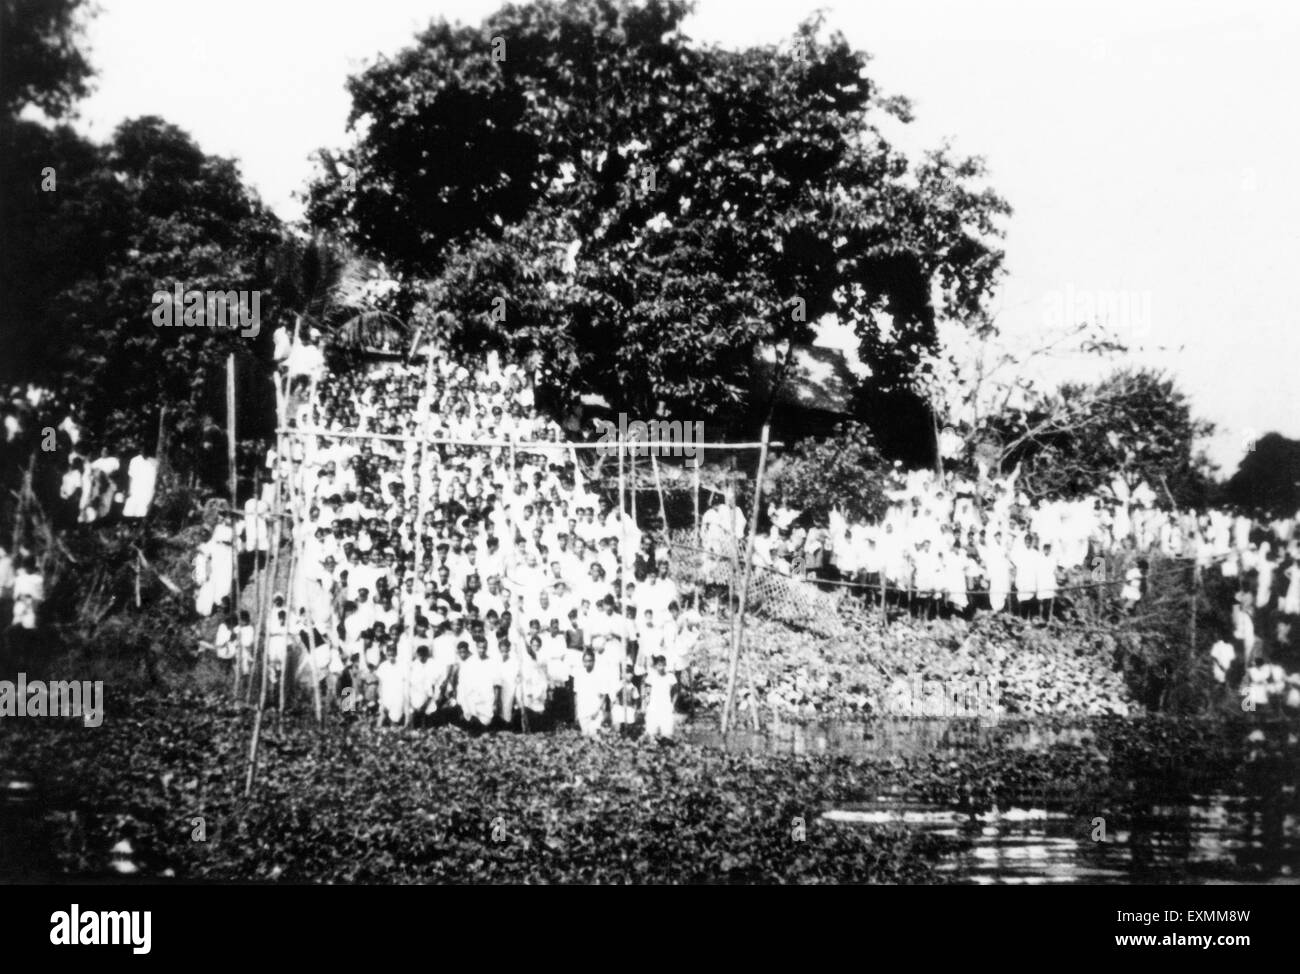 Mahatma Gandhi ashes immersed in Ganga river, Dhaka, Bengal, February 1948, India, Bangladesh, Asia, old vintage 1900s picture Stock Photo